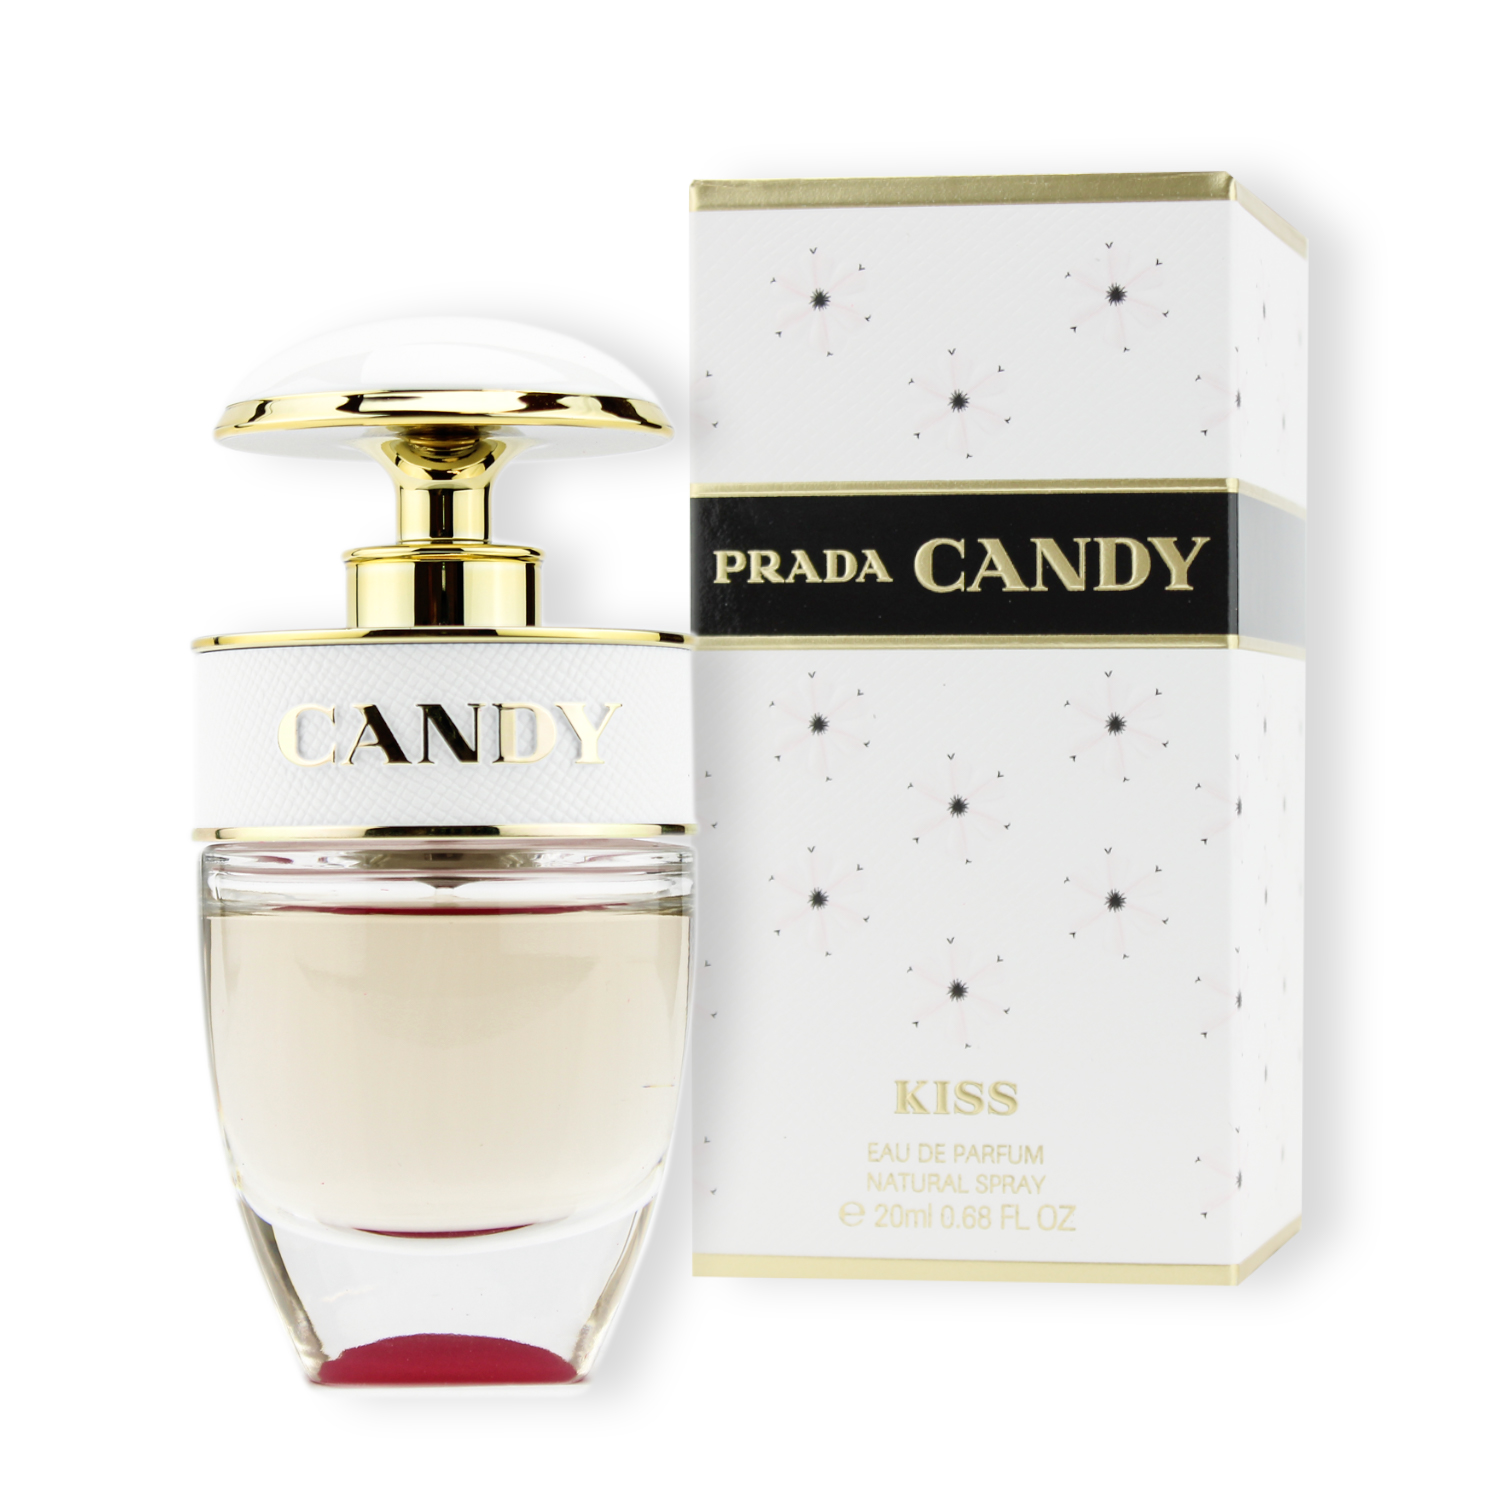 Prada Candy Kiss Eau de Parfum 20ml